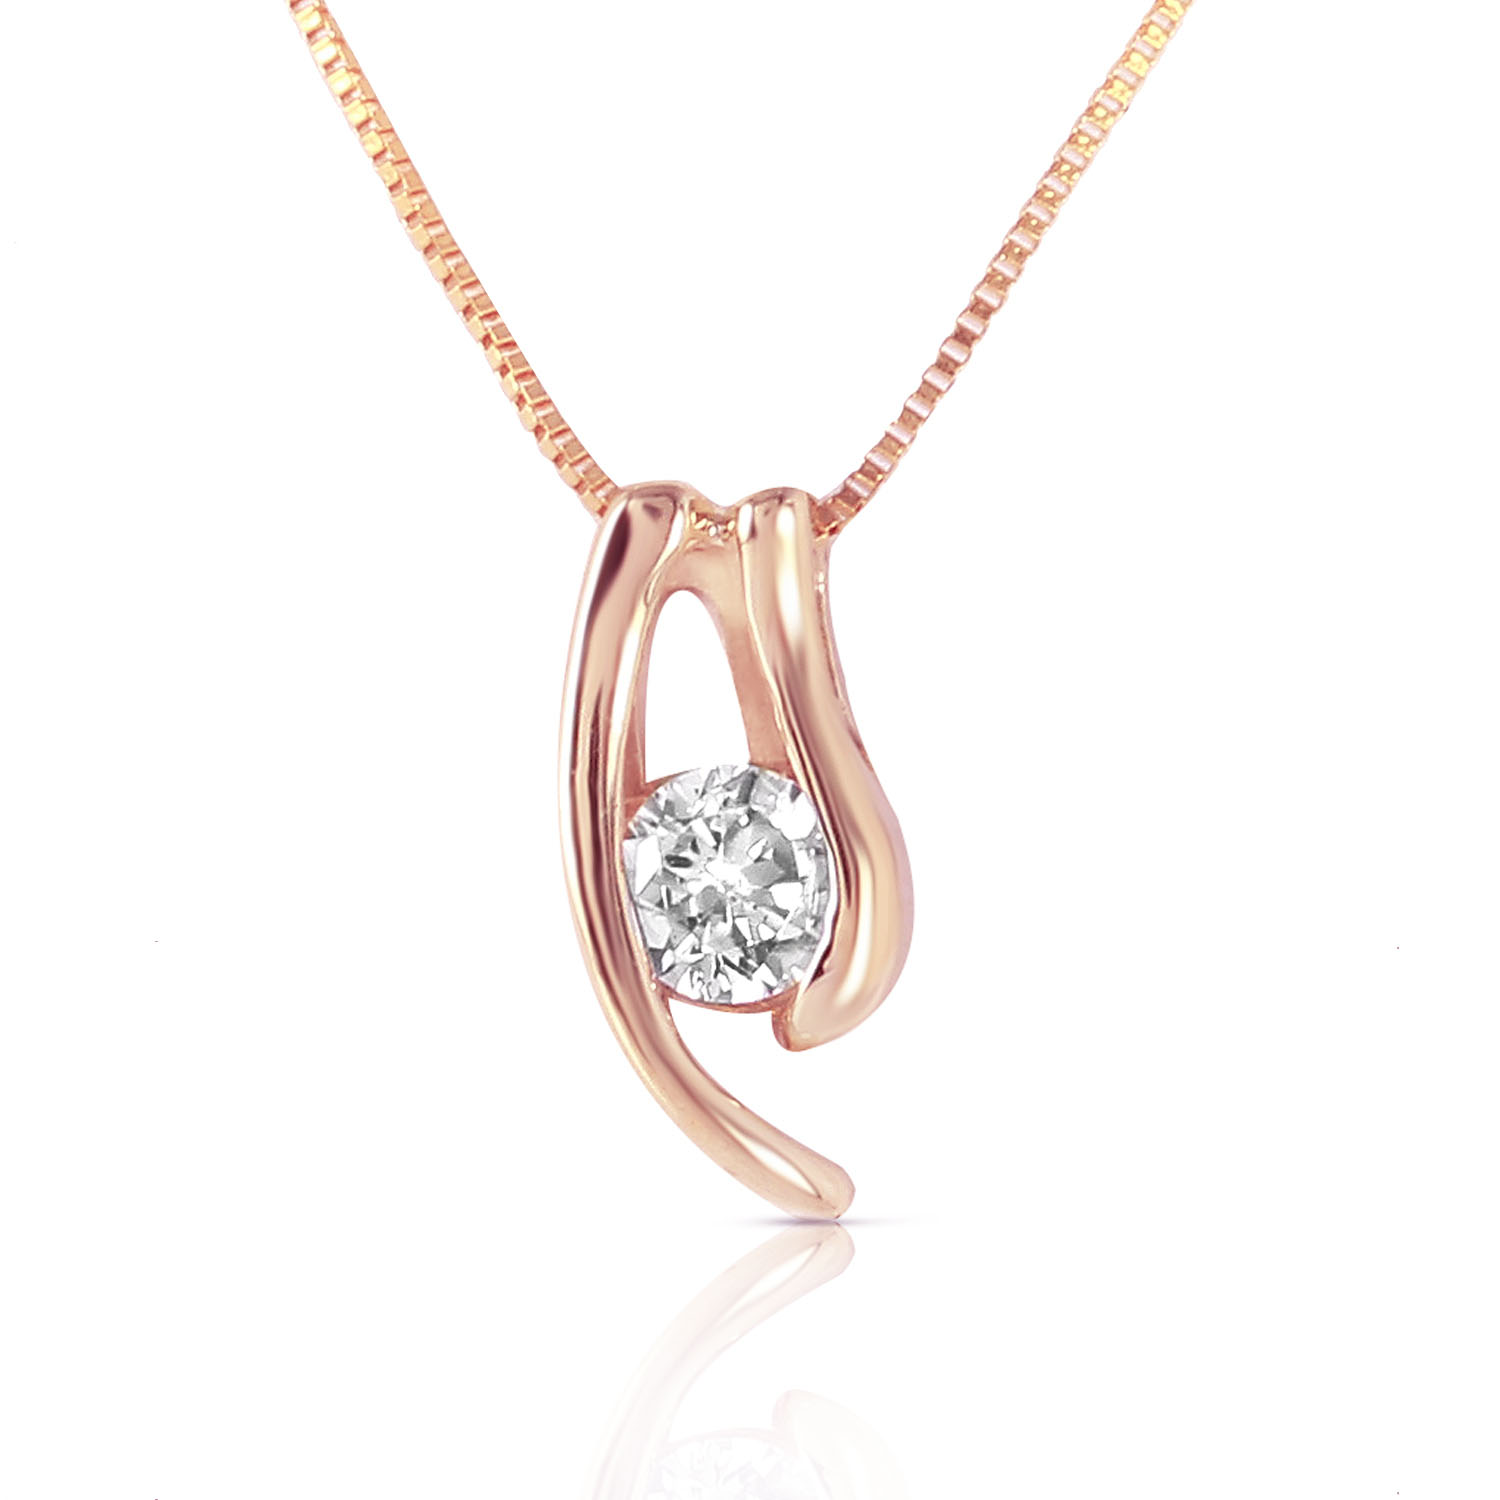 14K Solid Rose gold fine Necklace 16-24" wgenuine 0.15 CTW Diamond | eBay